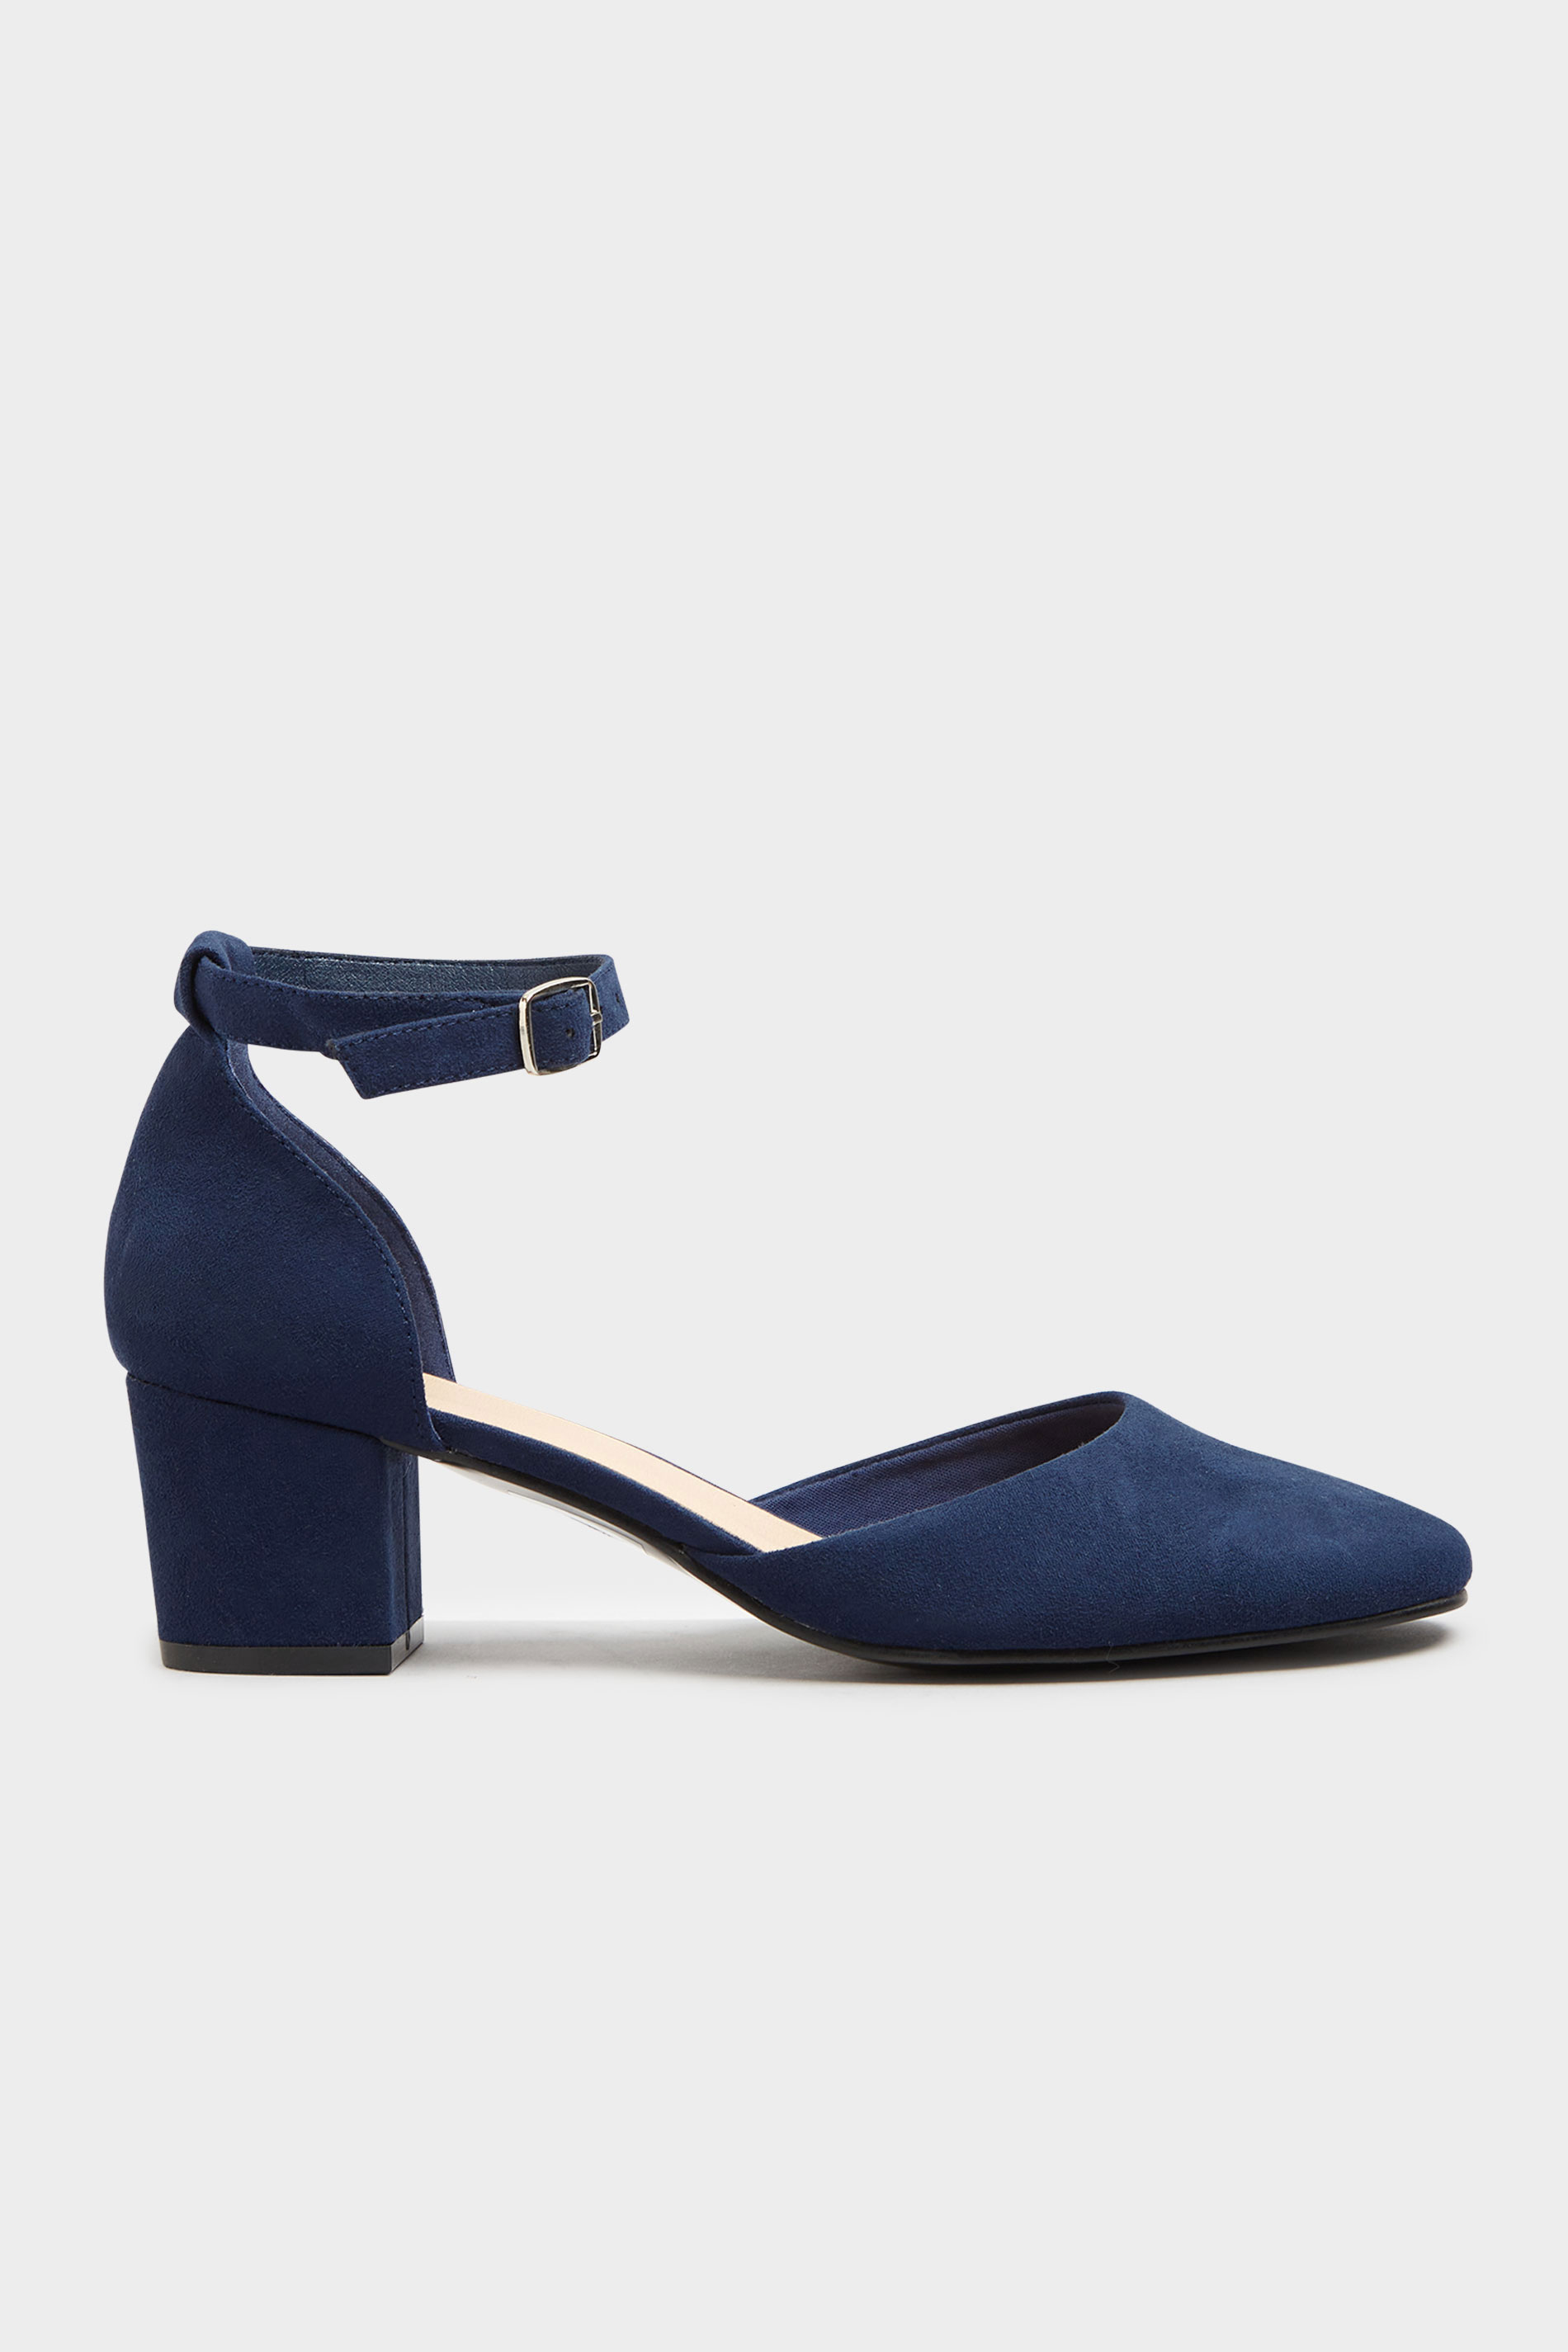 Womens Shoes Heels | LTS Navy Blue Block Heel Court Shoes In Standard D Fit - PG89505